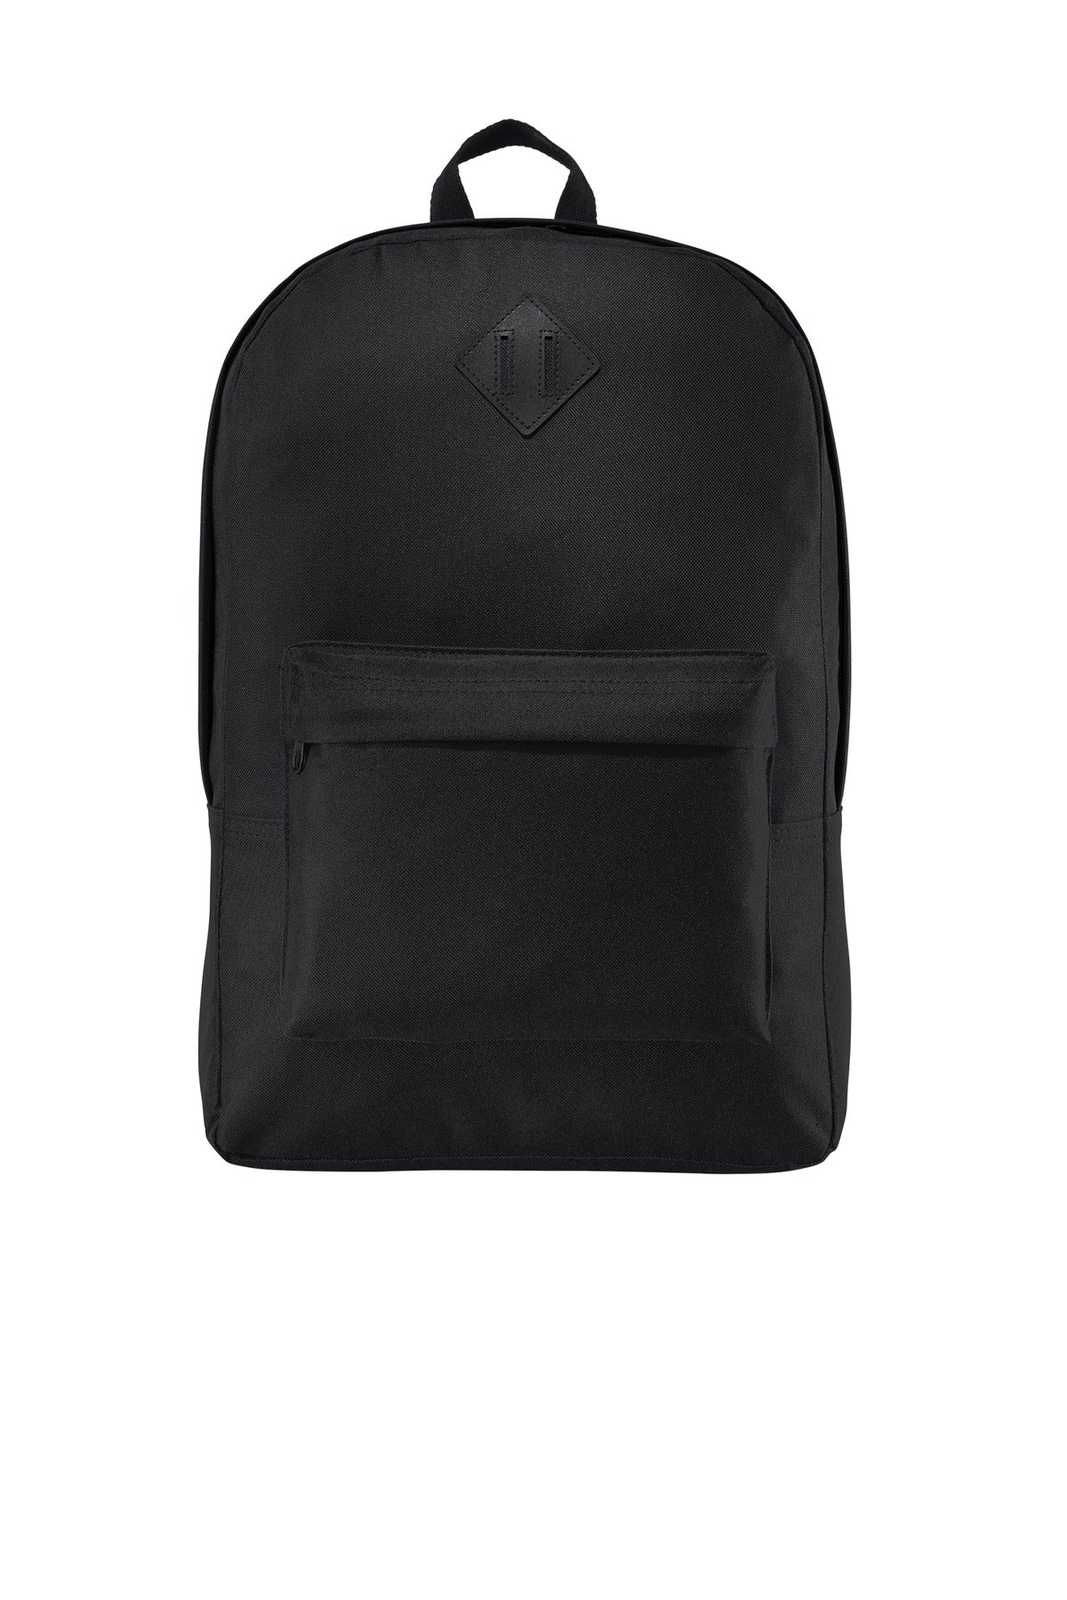 Port Authority BG7150 Retro Backpack - Black - HIT a Double - 1